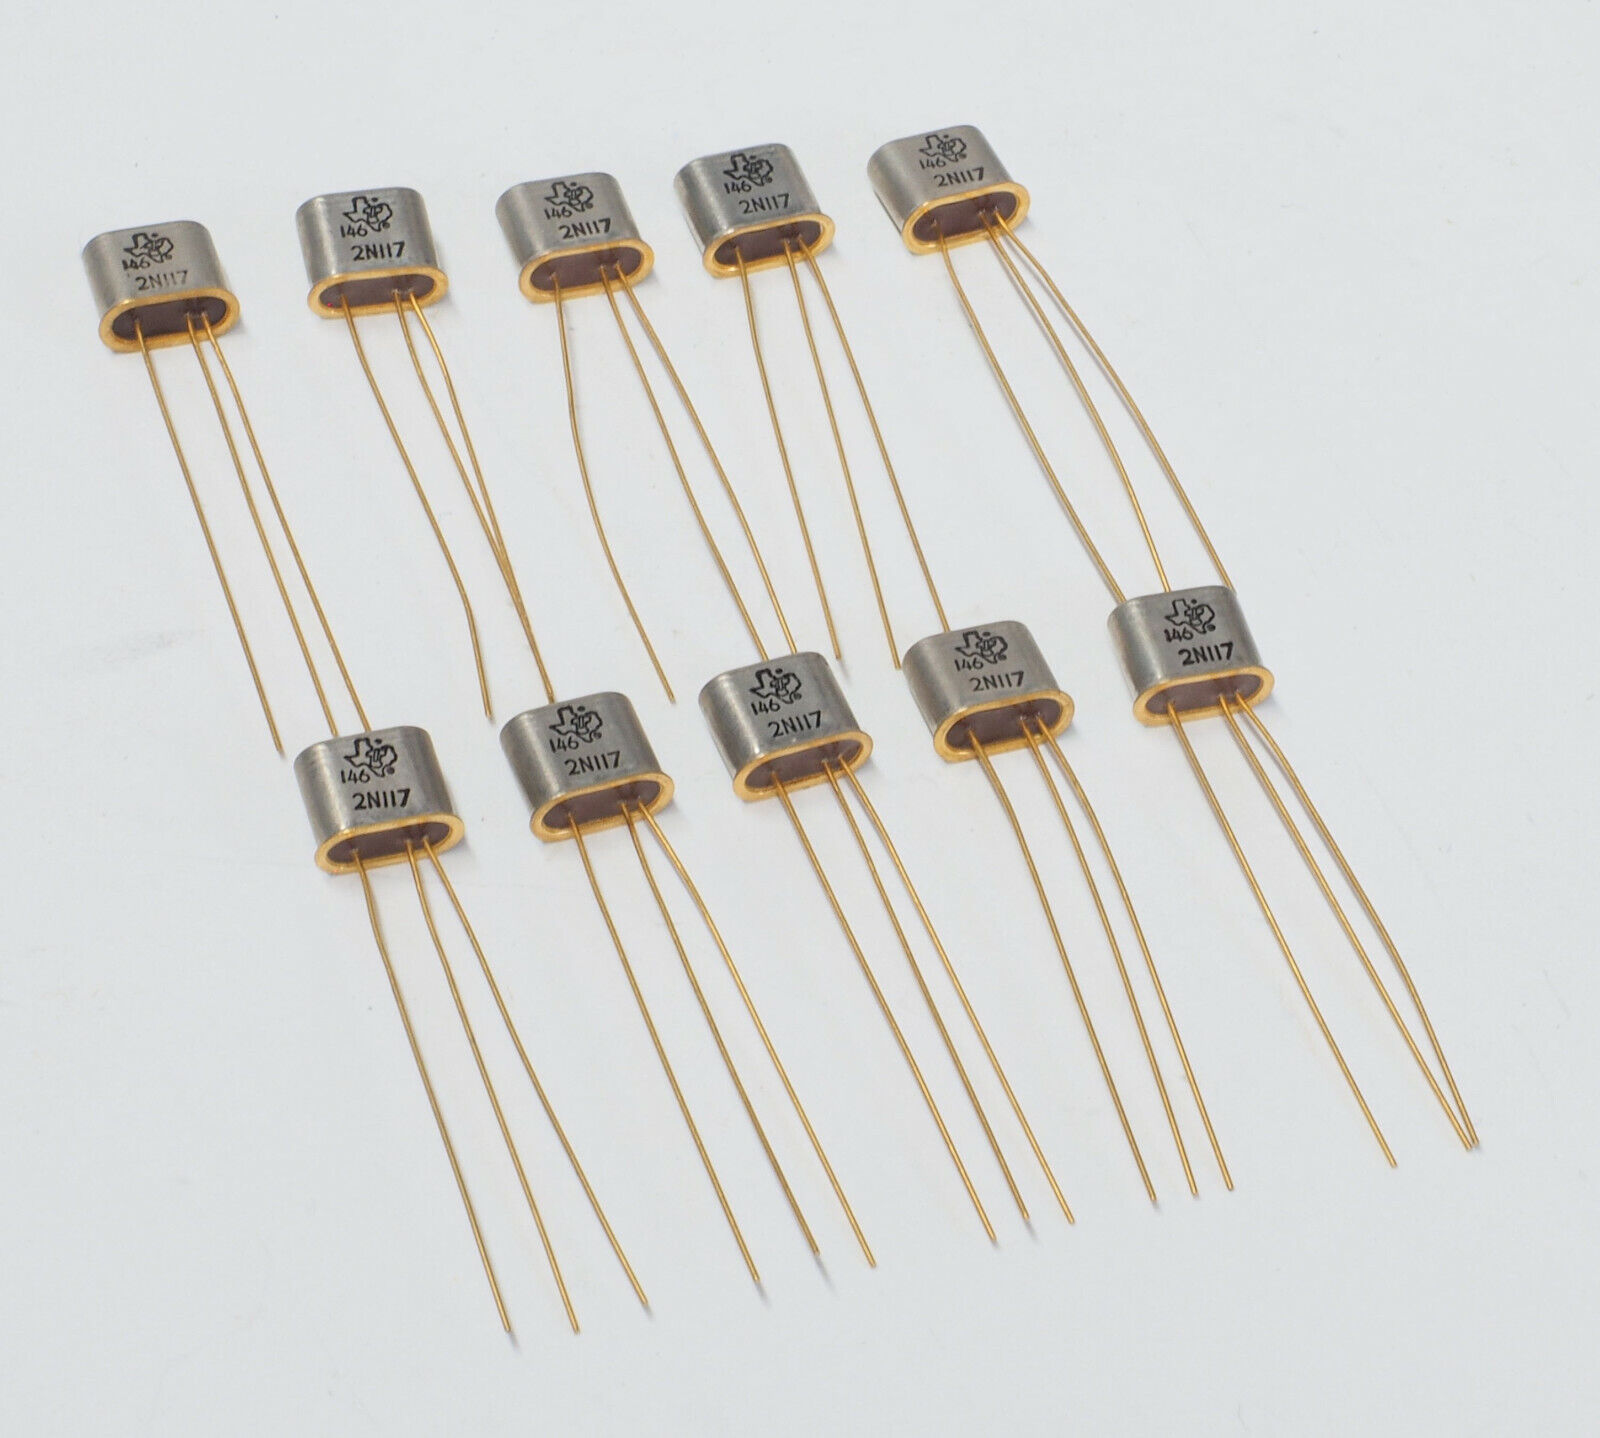 Qty 10 NOS Texas Instruments TI 2N117 Gold Lead Transistors